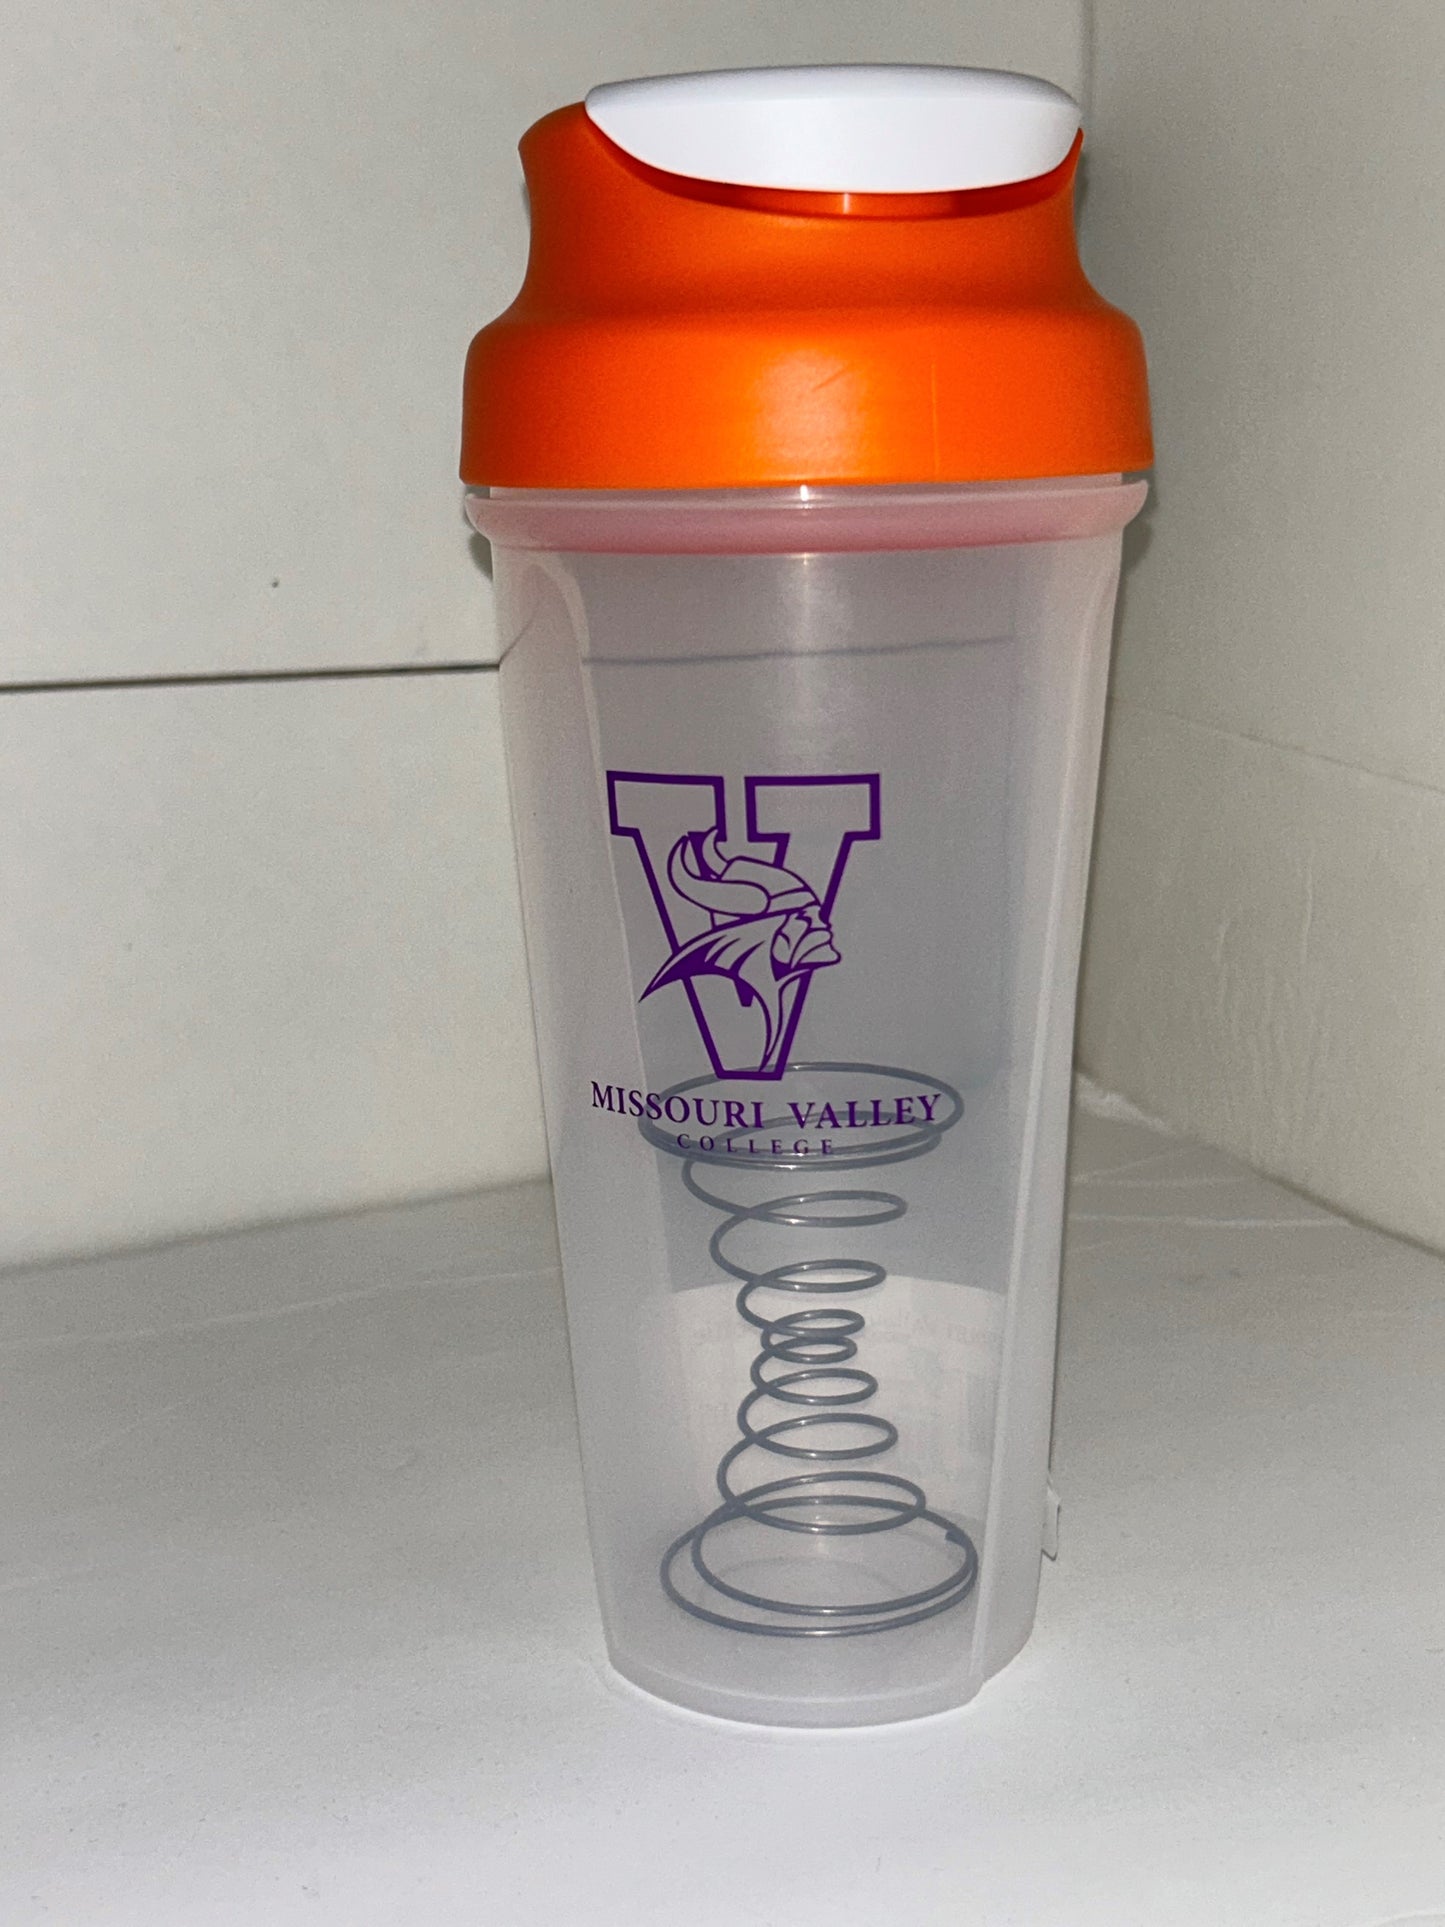 Shaker bottle with Missouri Valley logo